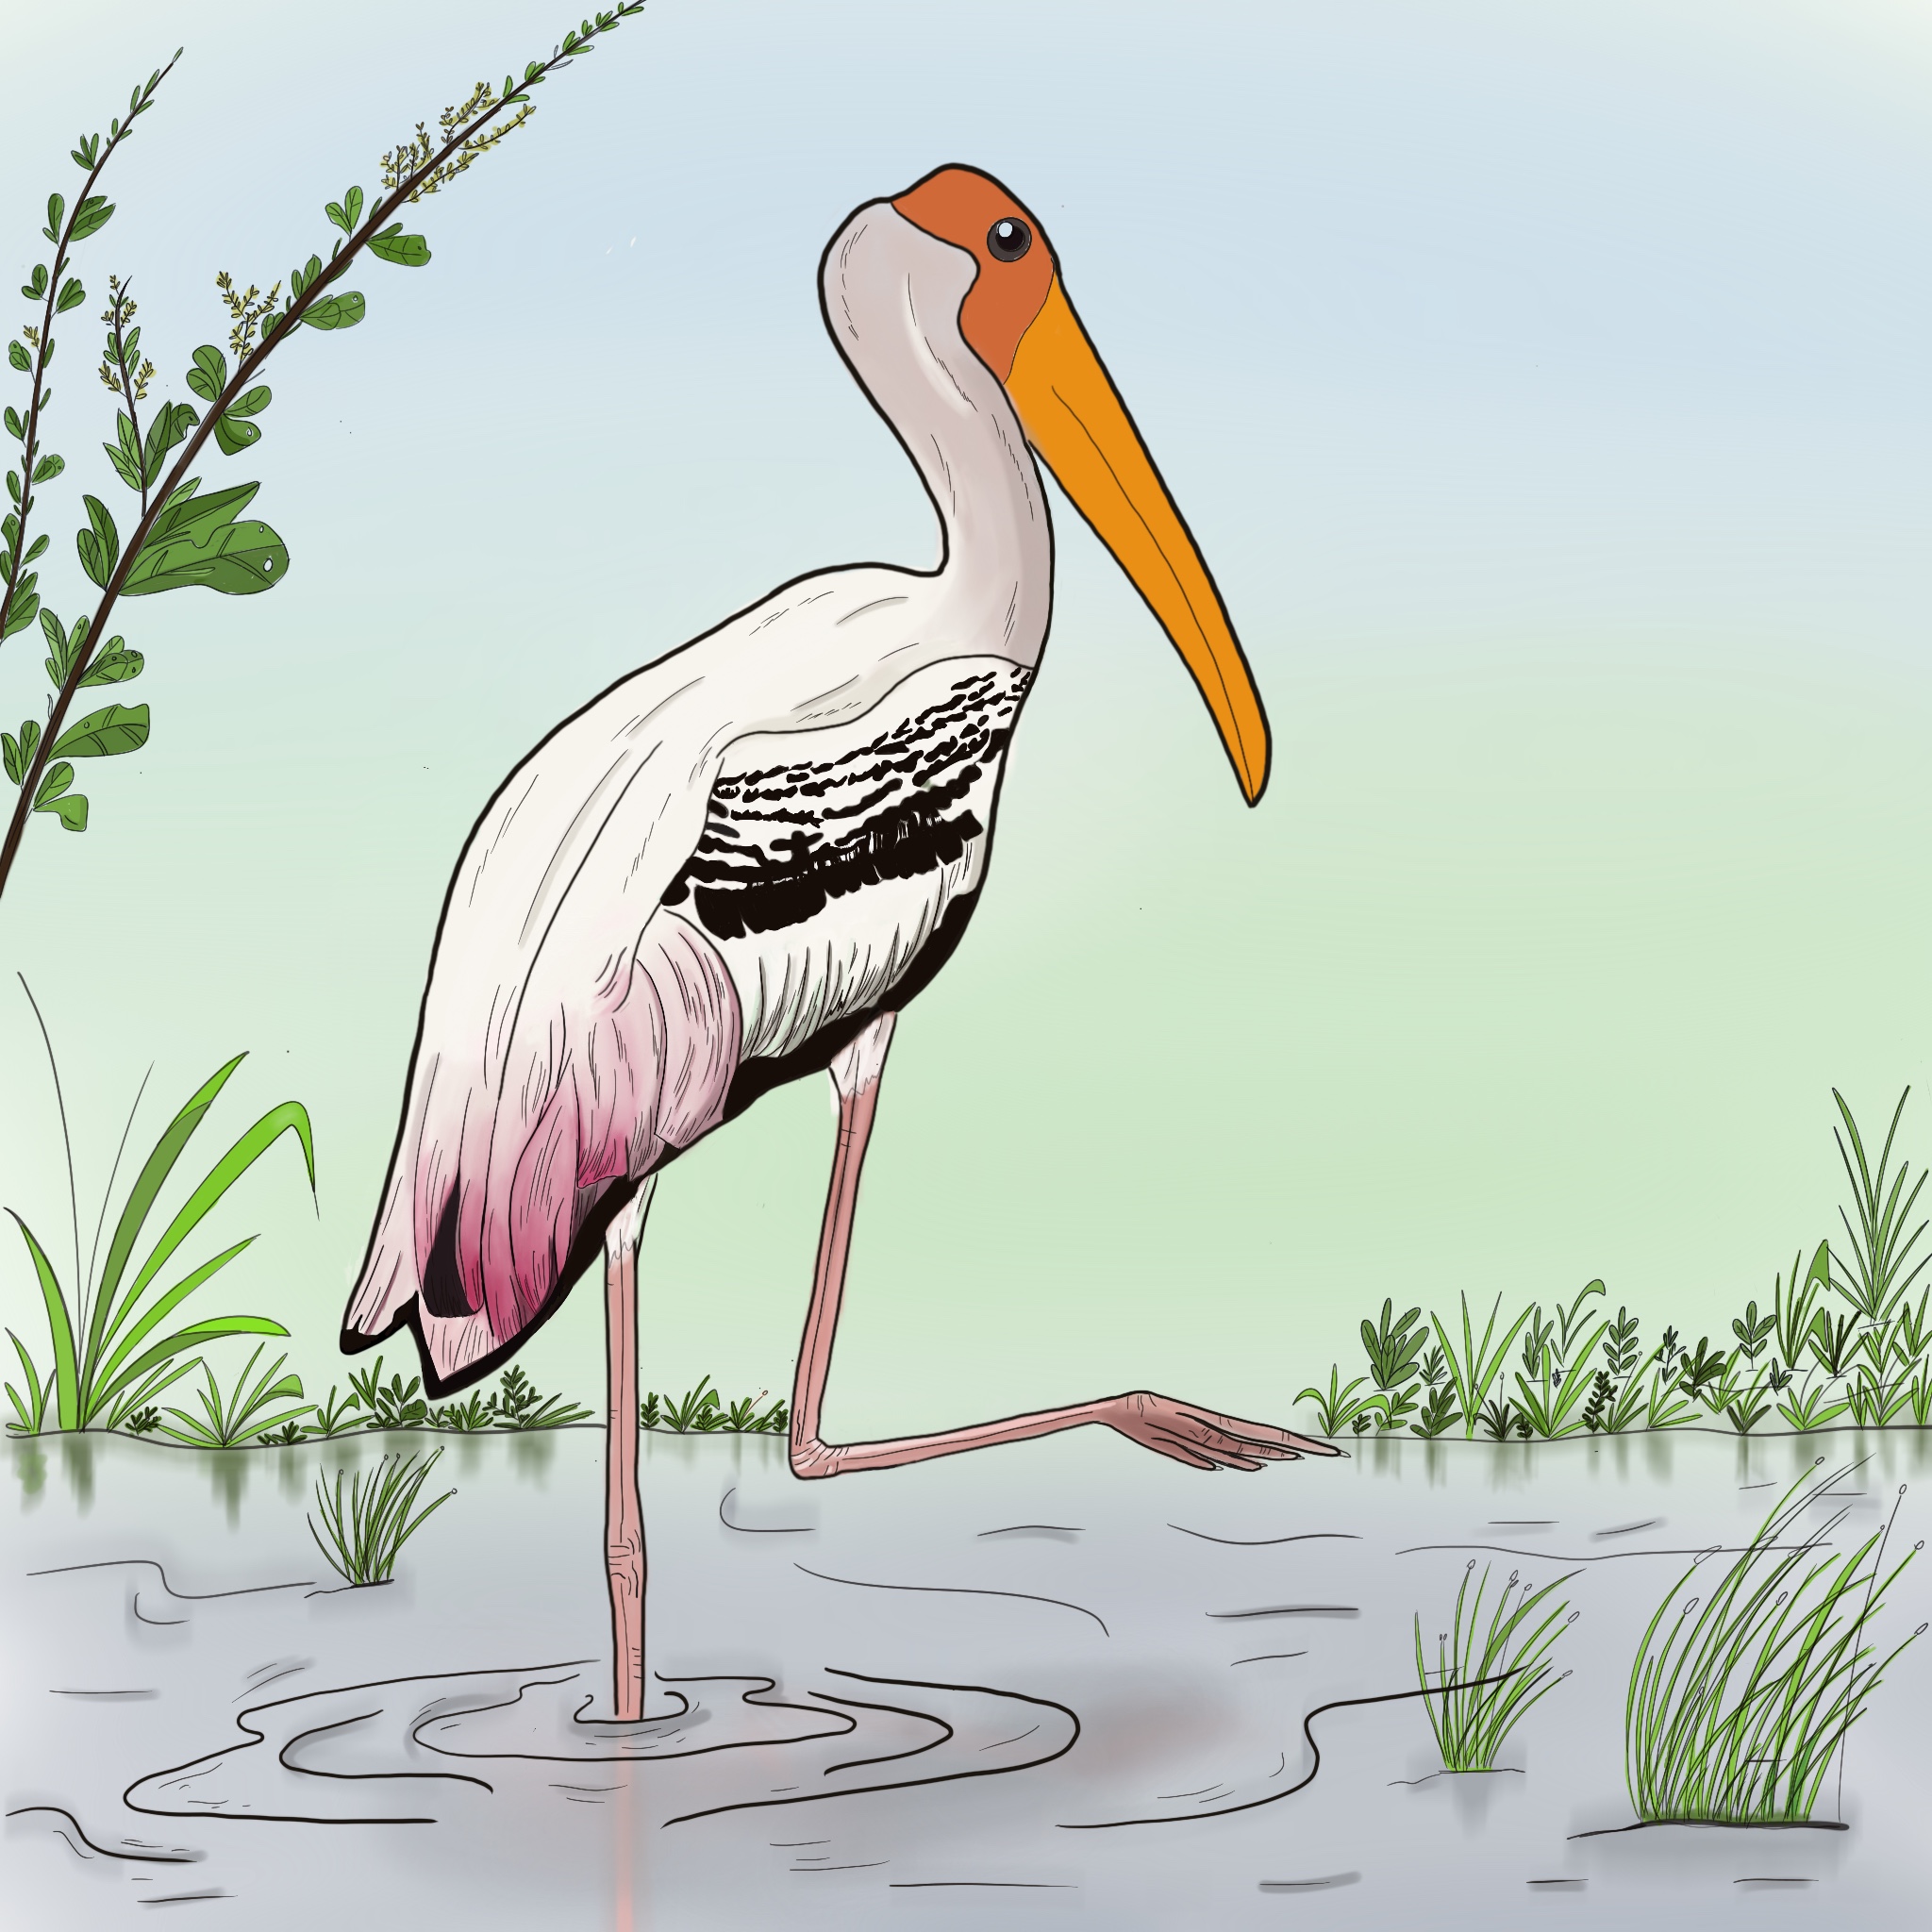 The Painted Stork_by Tan Viriya, YEA: Waterbird Generation